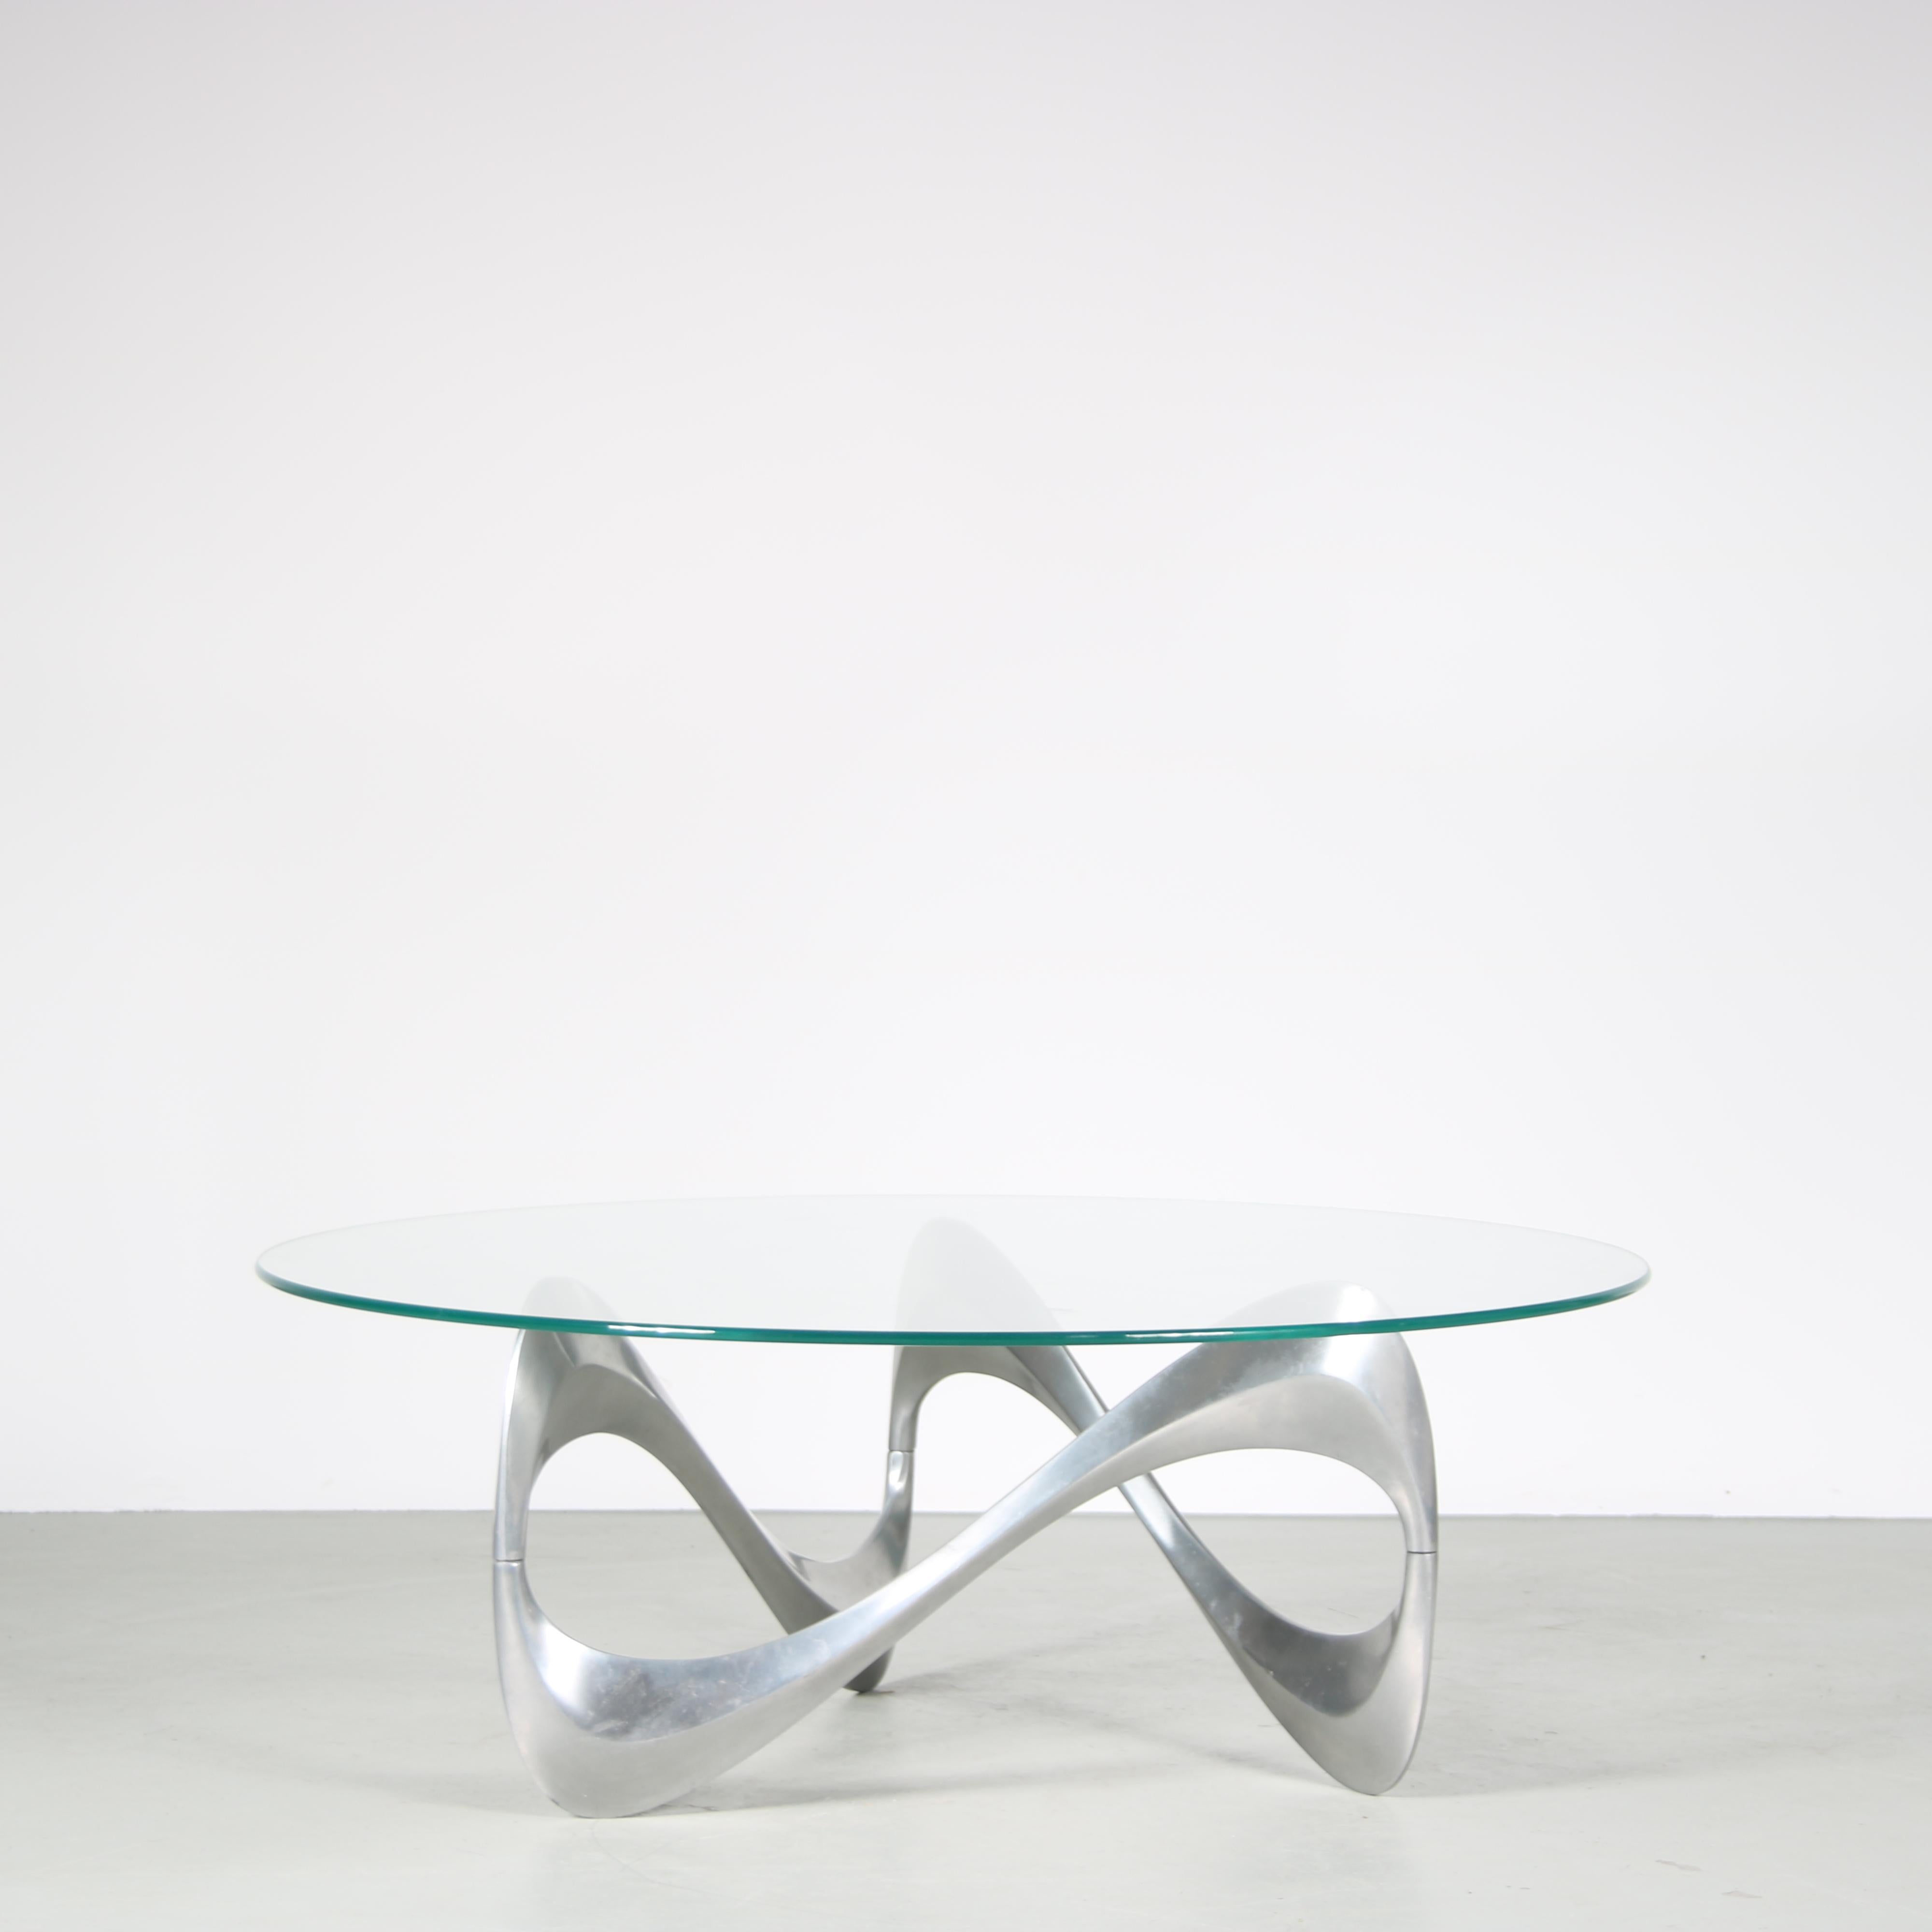 Late 20th Century Knut Hesterberg “Snake” Coffee Table for Ronald Schmitt, Denmark, 1970